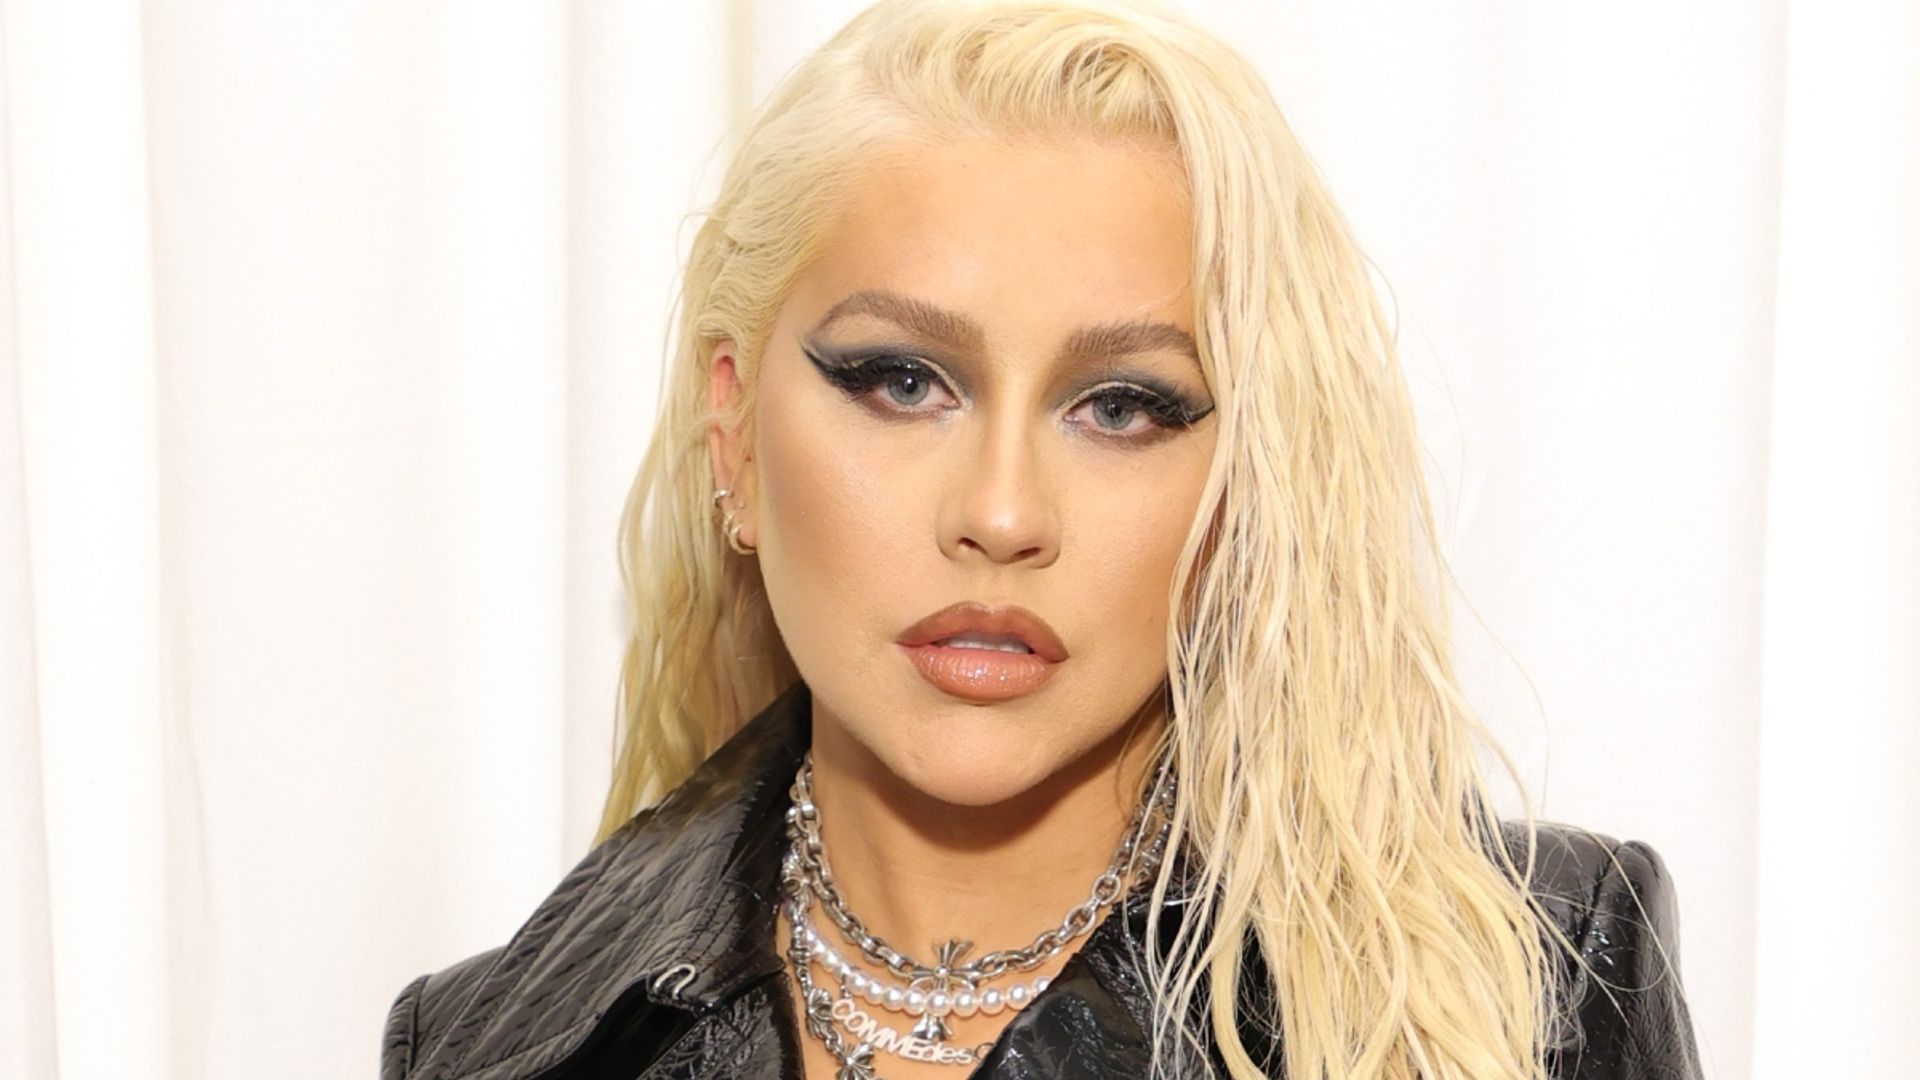 Christina Aguilera shares risqué photos as she celebrates milestone occasion